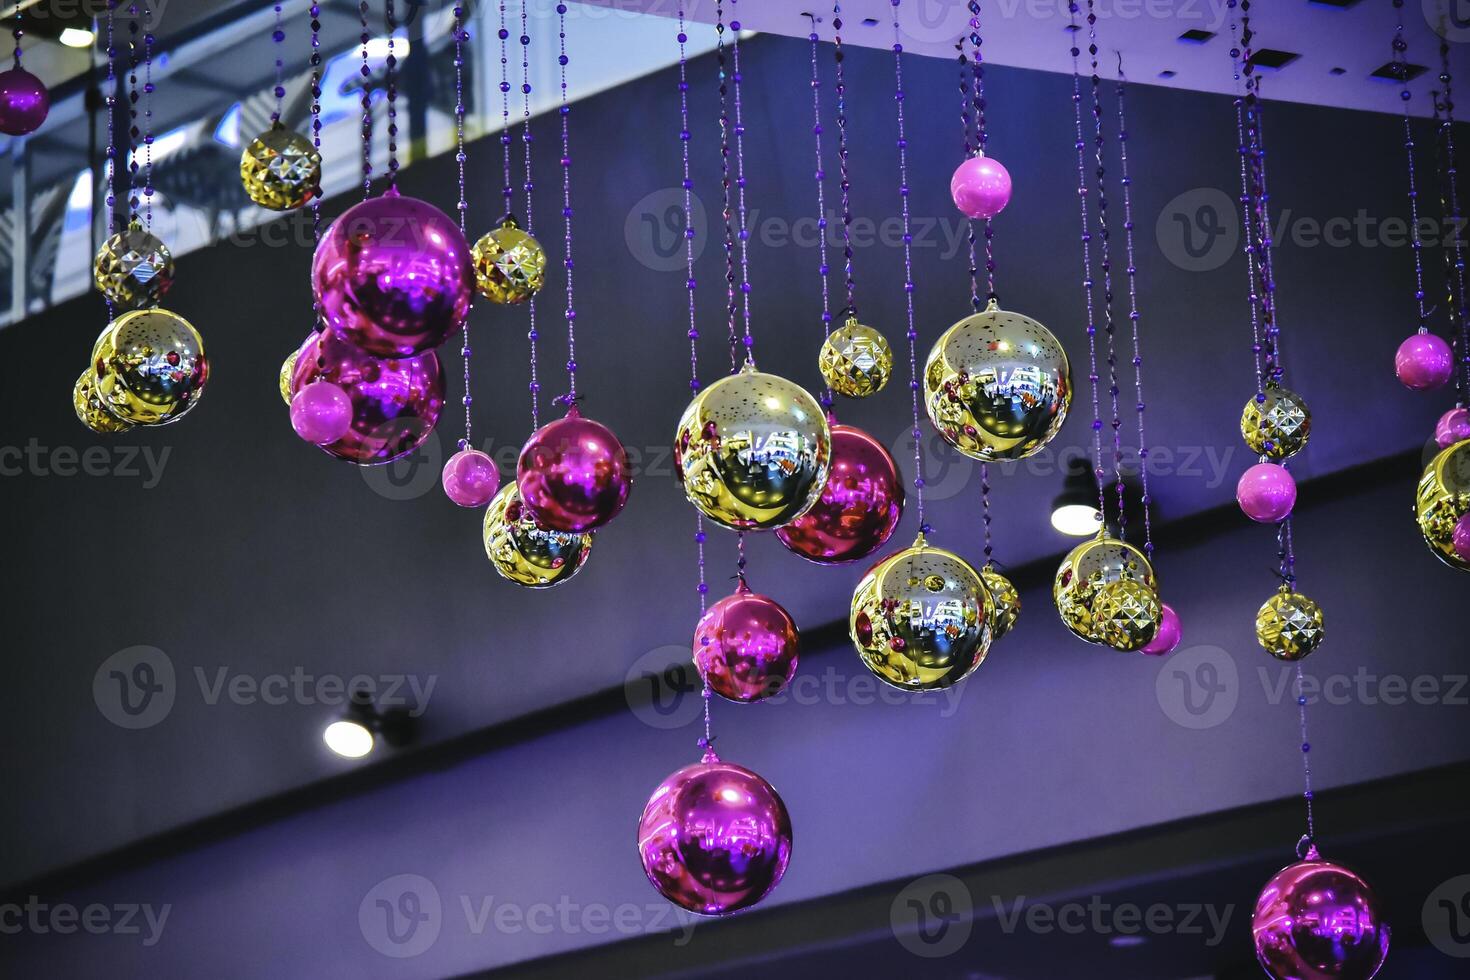 The christmas ball hangs beautifully during the festive season. photo